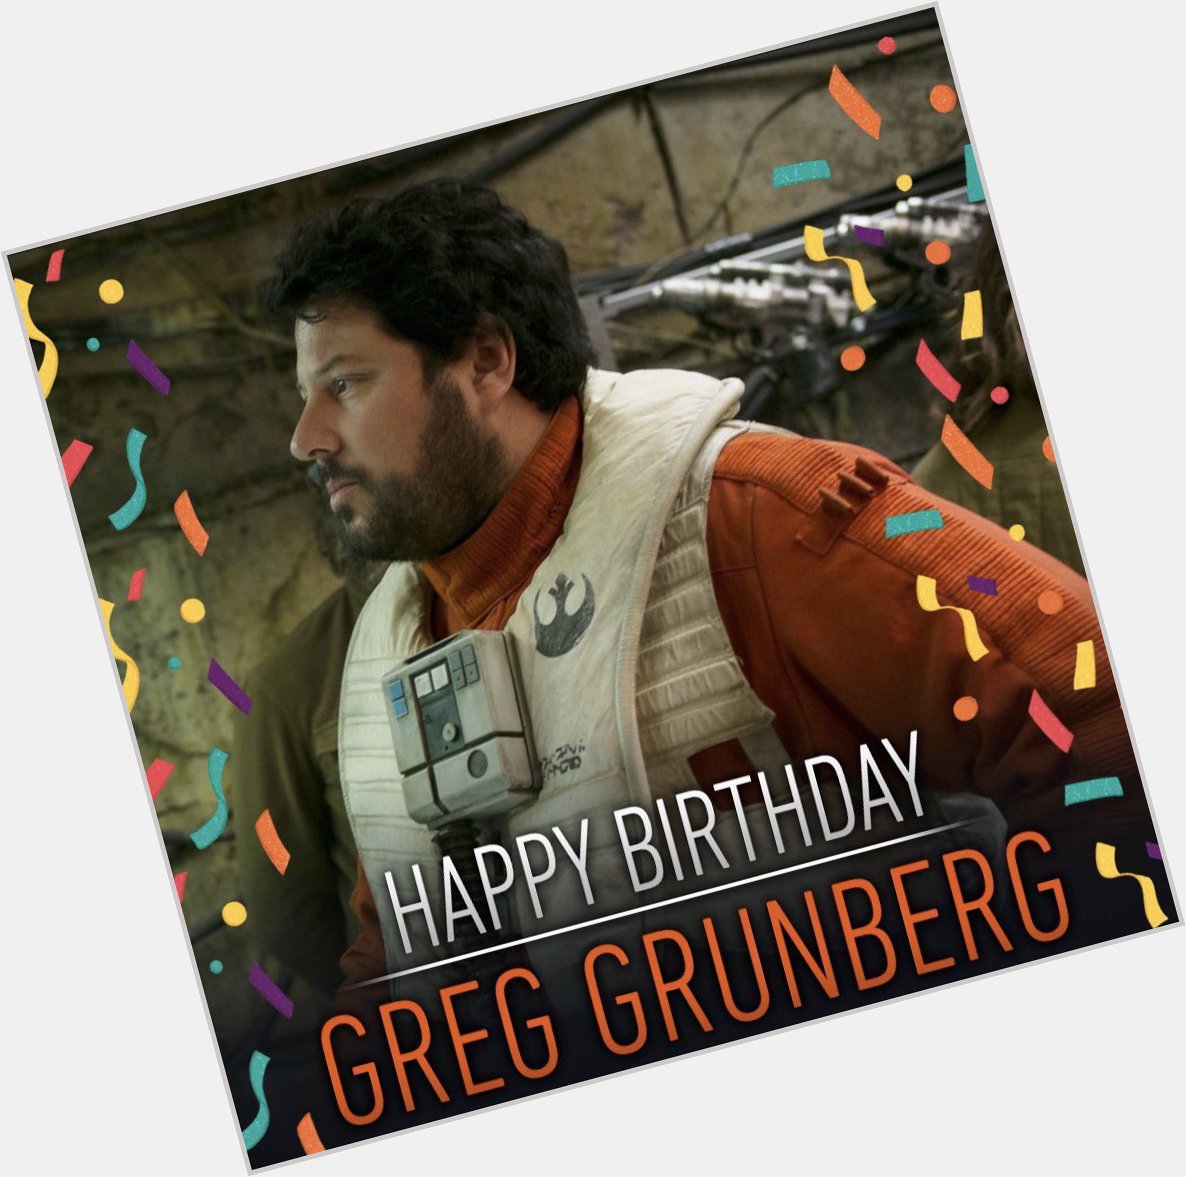 Happy birthday Greg Grunberg       